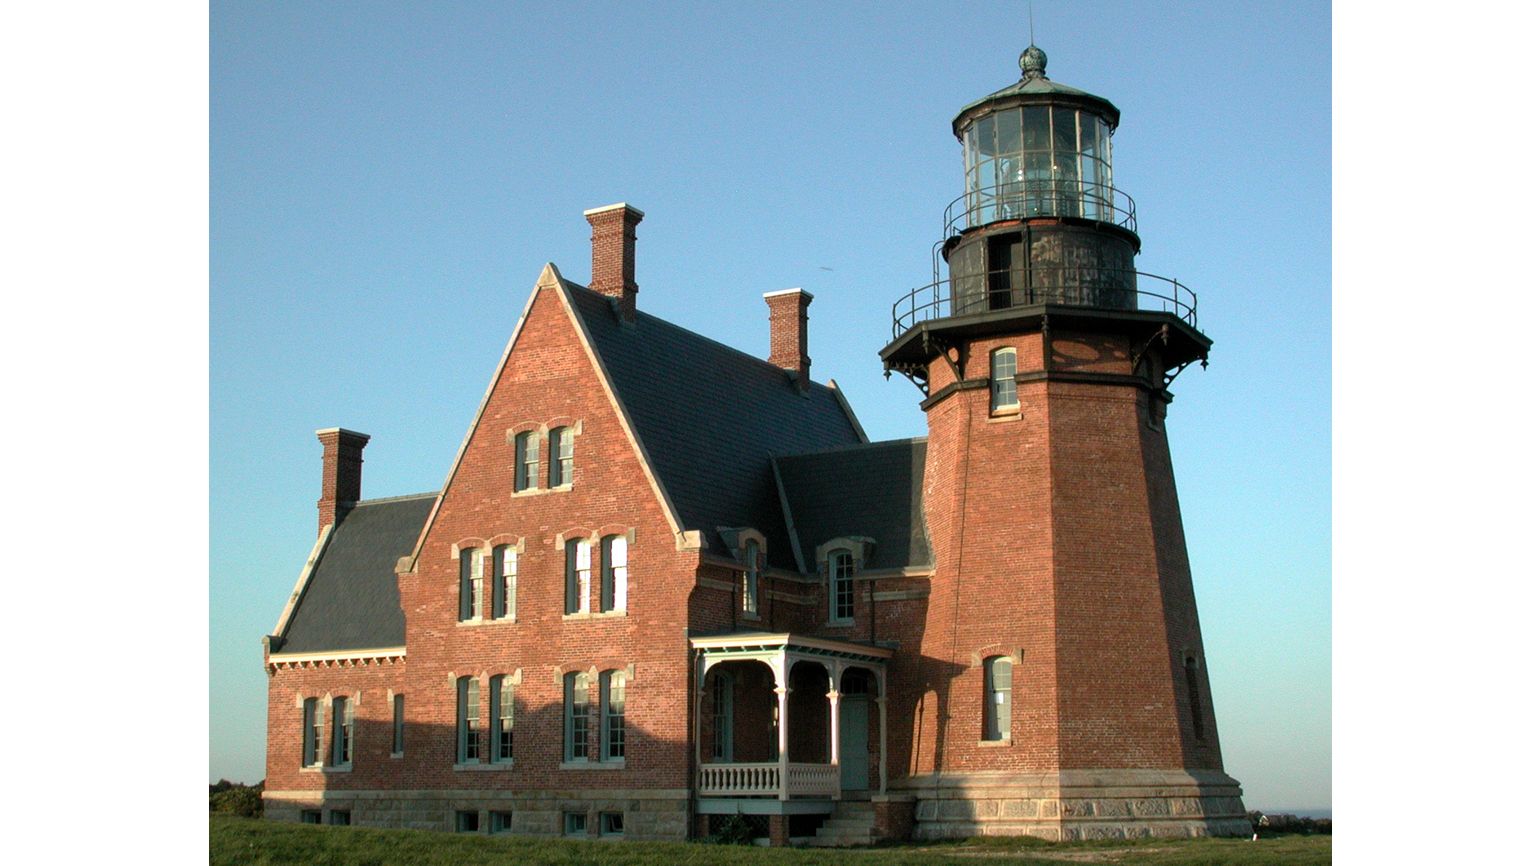 South East Lighthouse, Block Island, Rhode Island